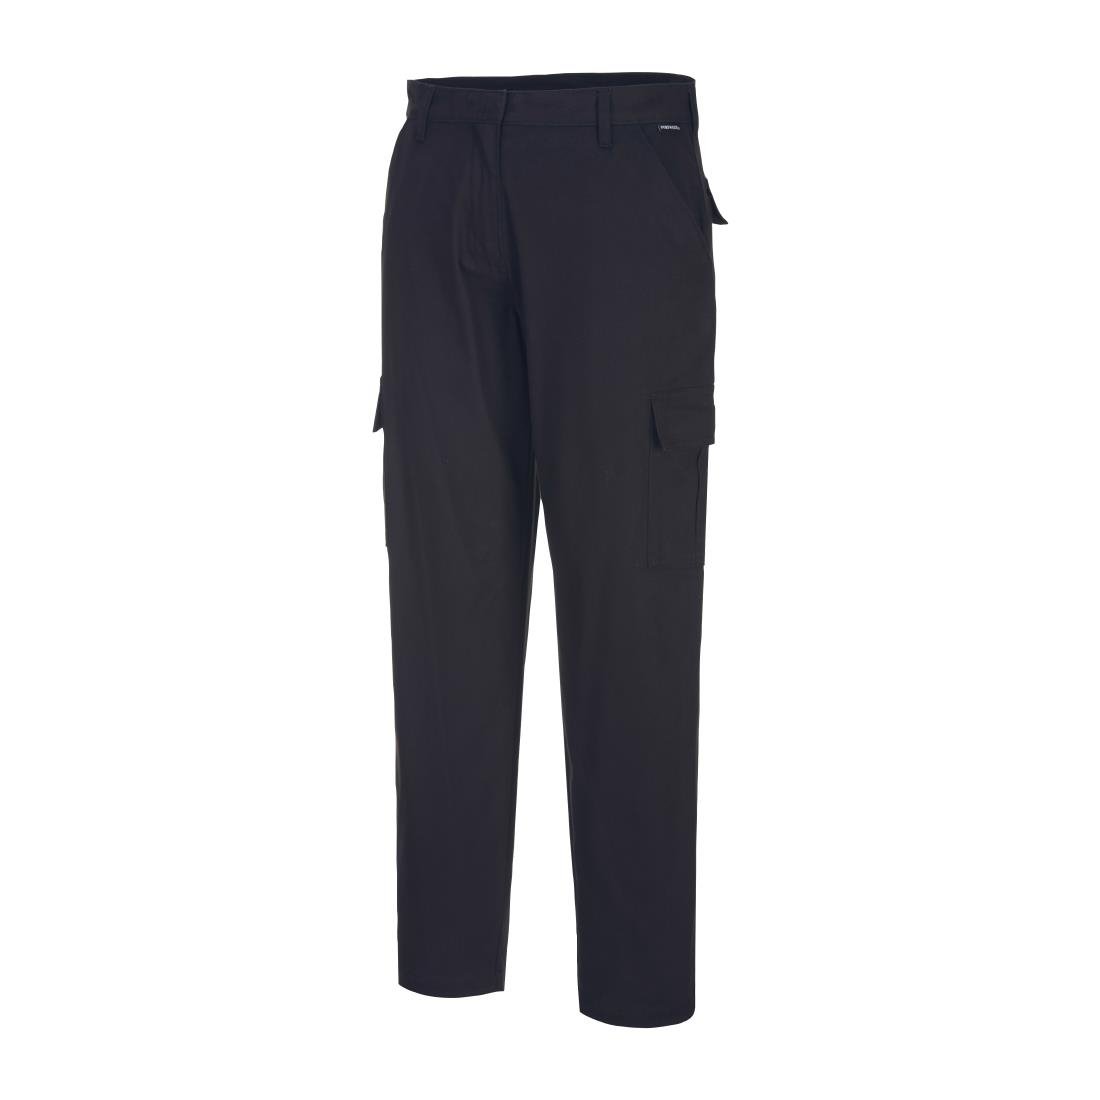 BA088-16 Portwest Eco Women's Stretch Cargo Trousers Black Size 16